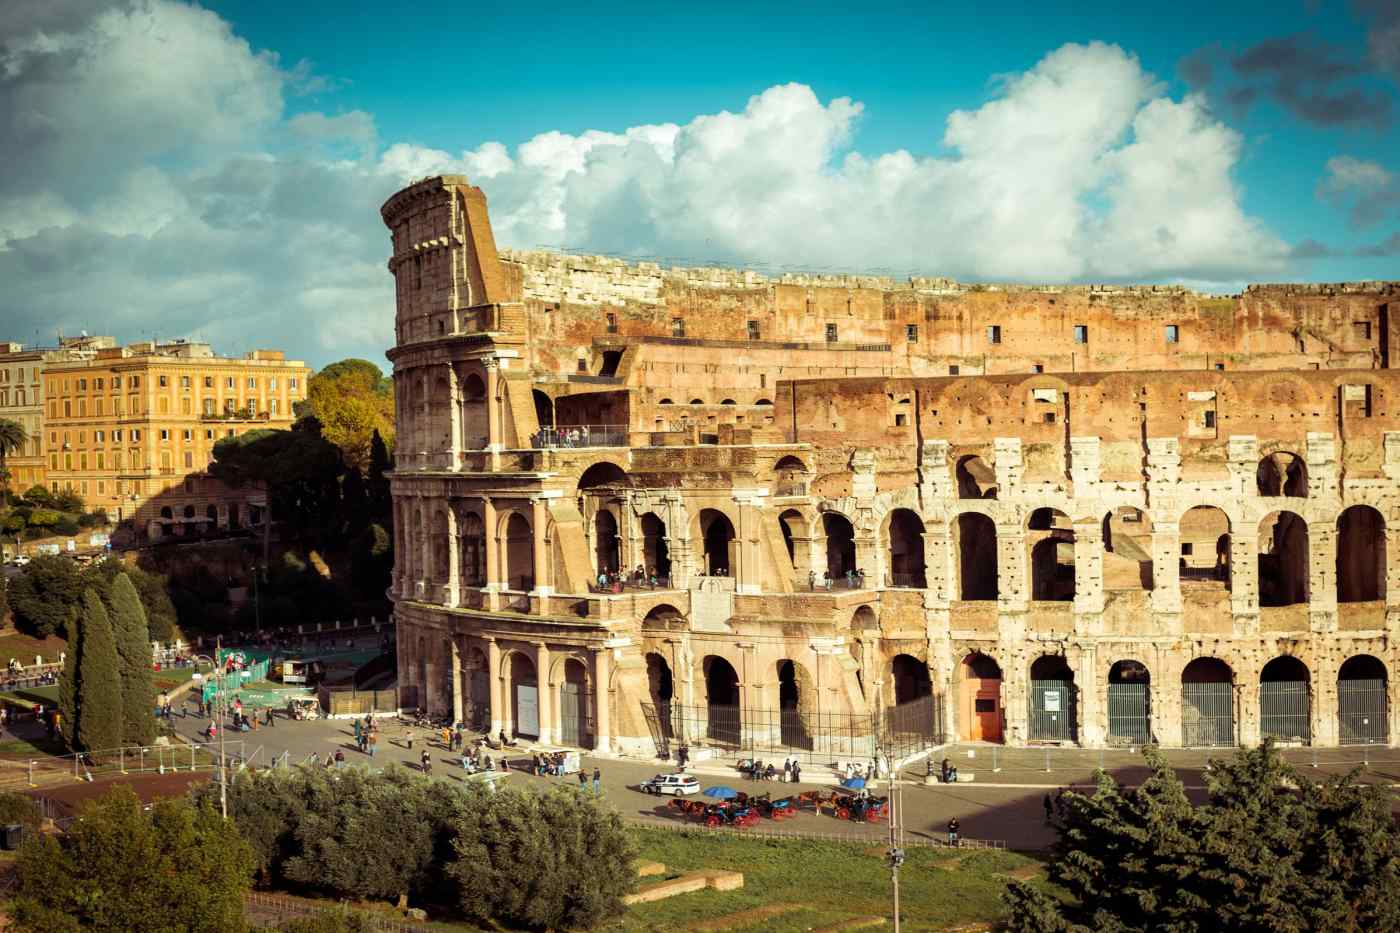 Colosseum • Rome, Italy